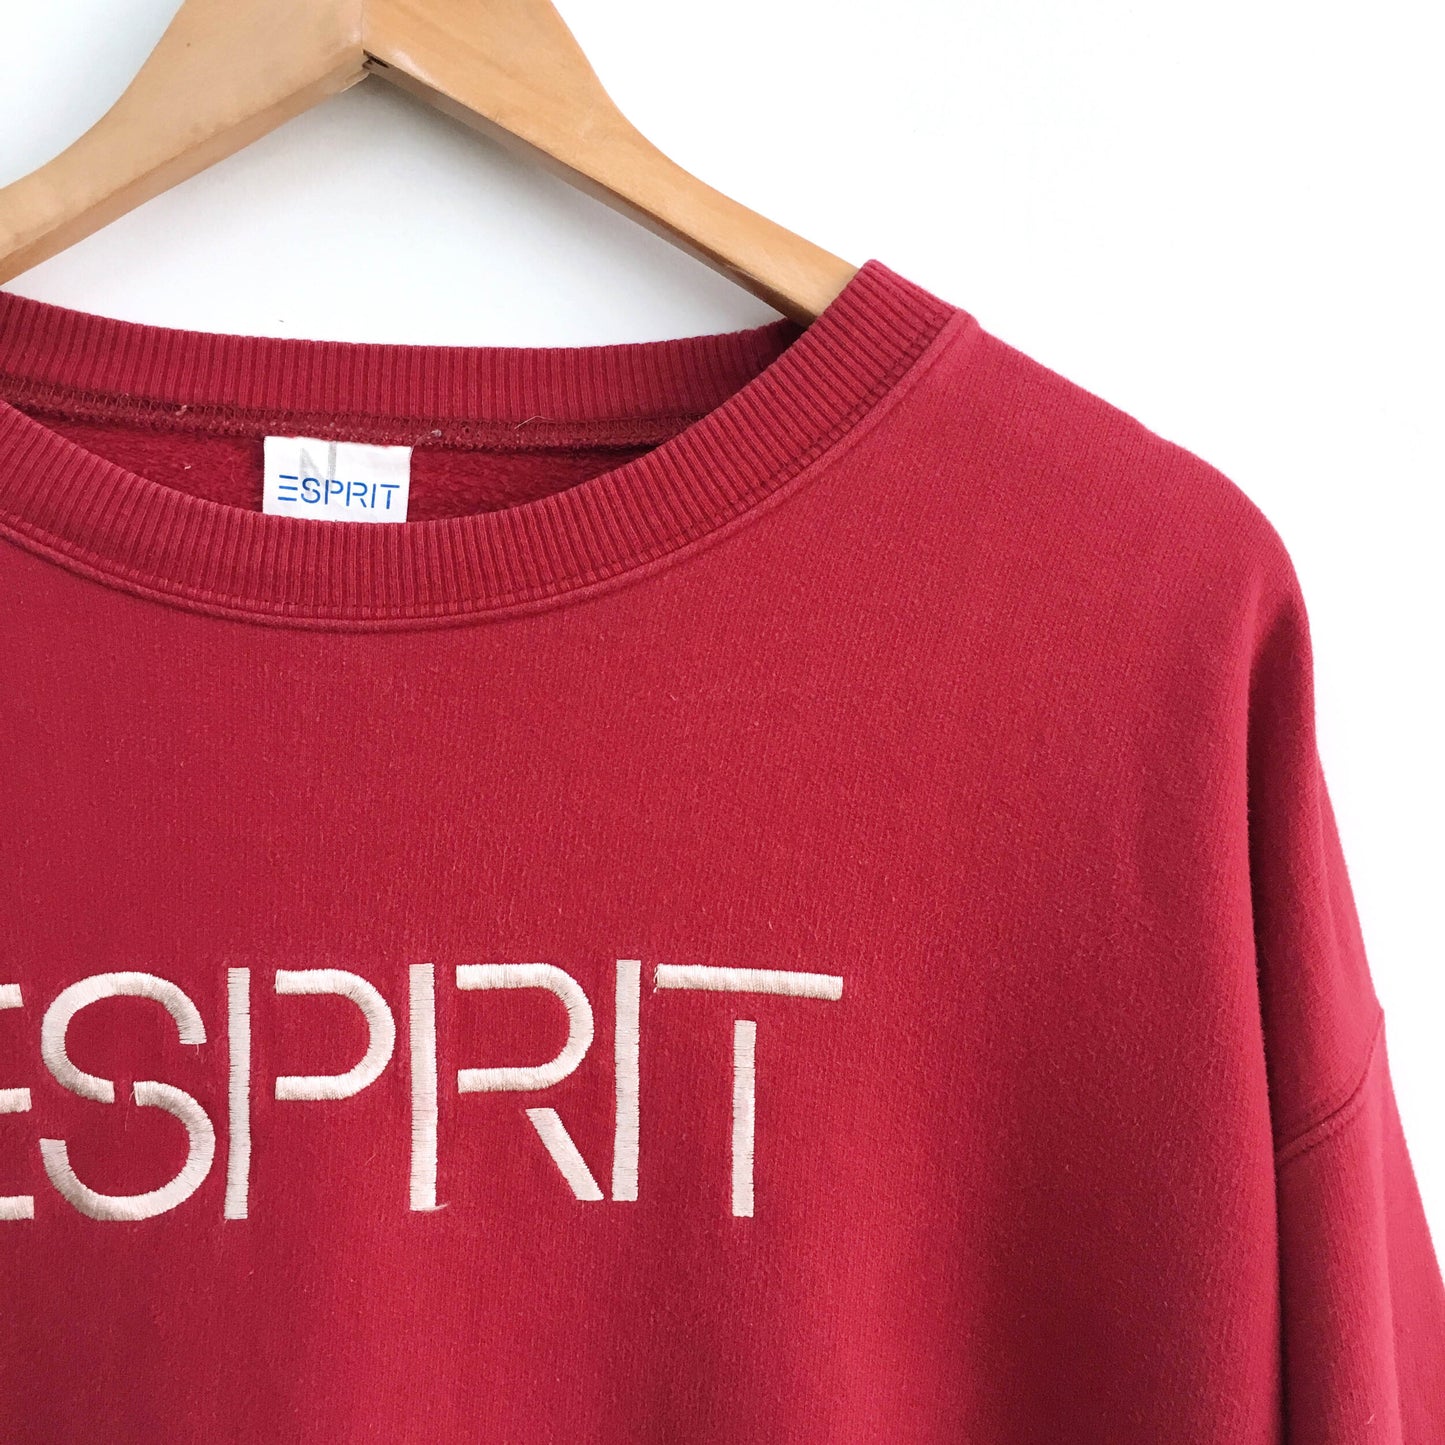 Vintage Esprit Logo Sweatshirt - size Large